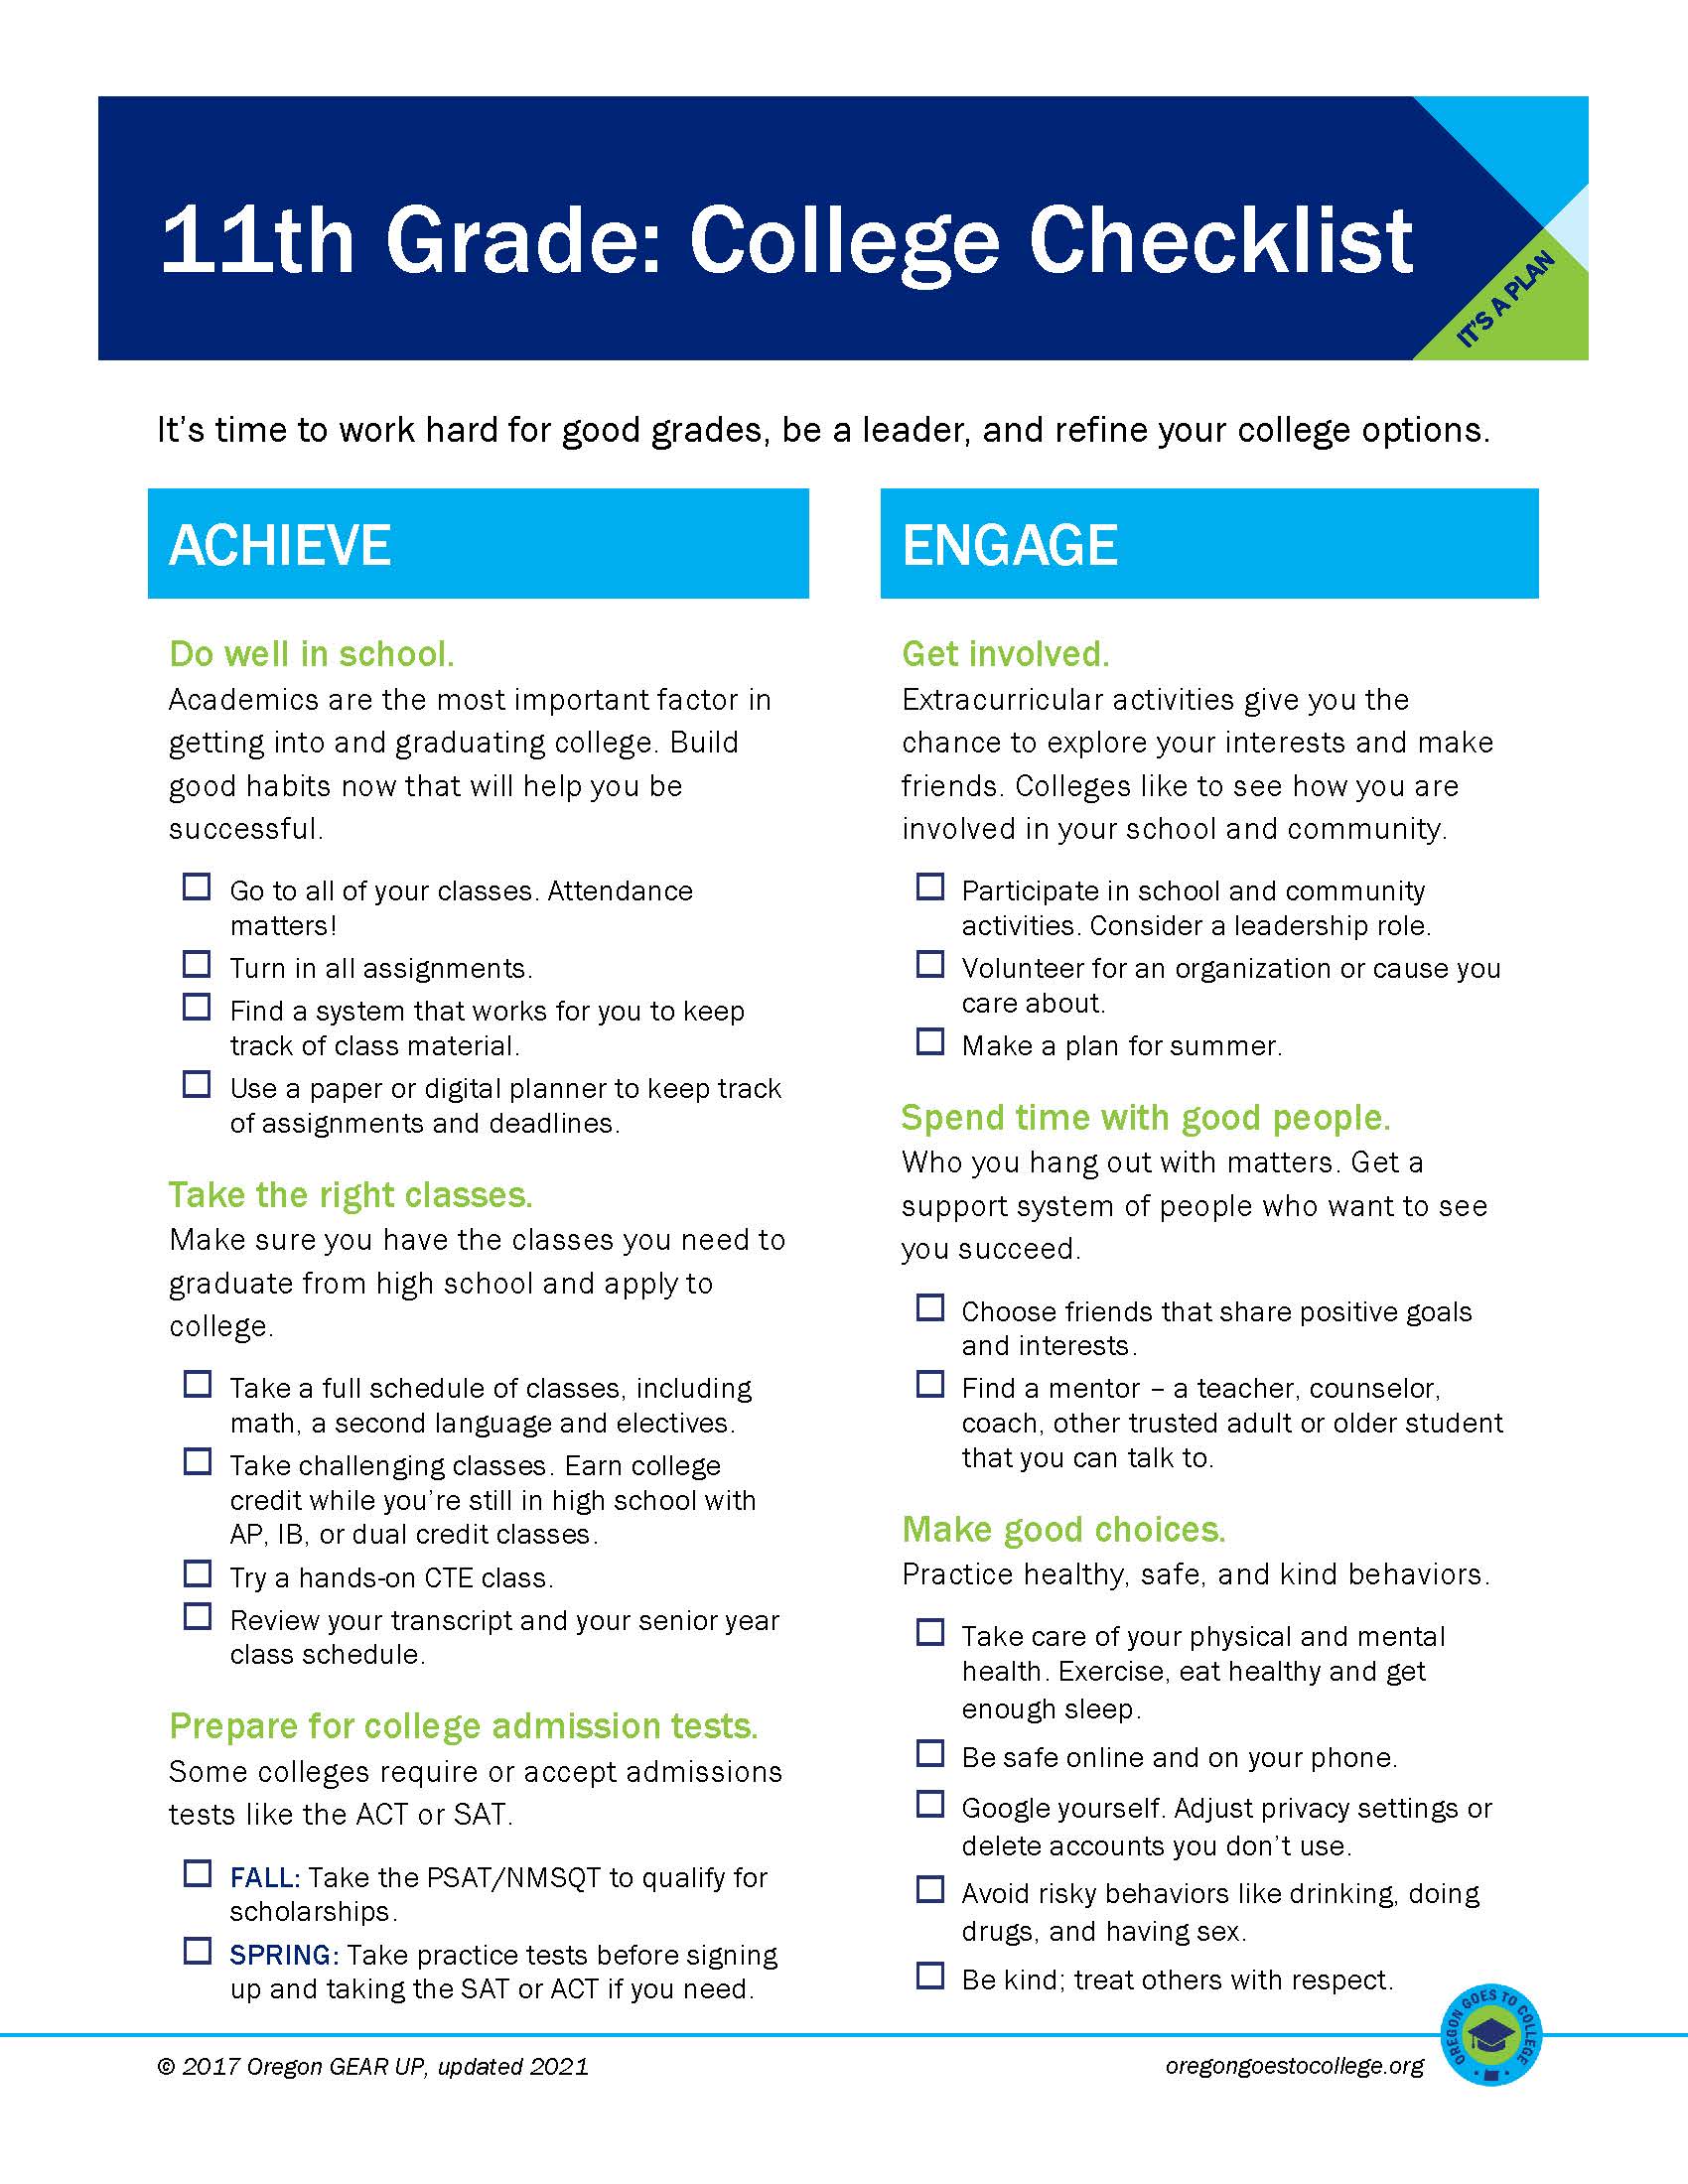 Screenshot of 11th grade checklist